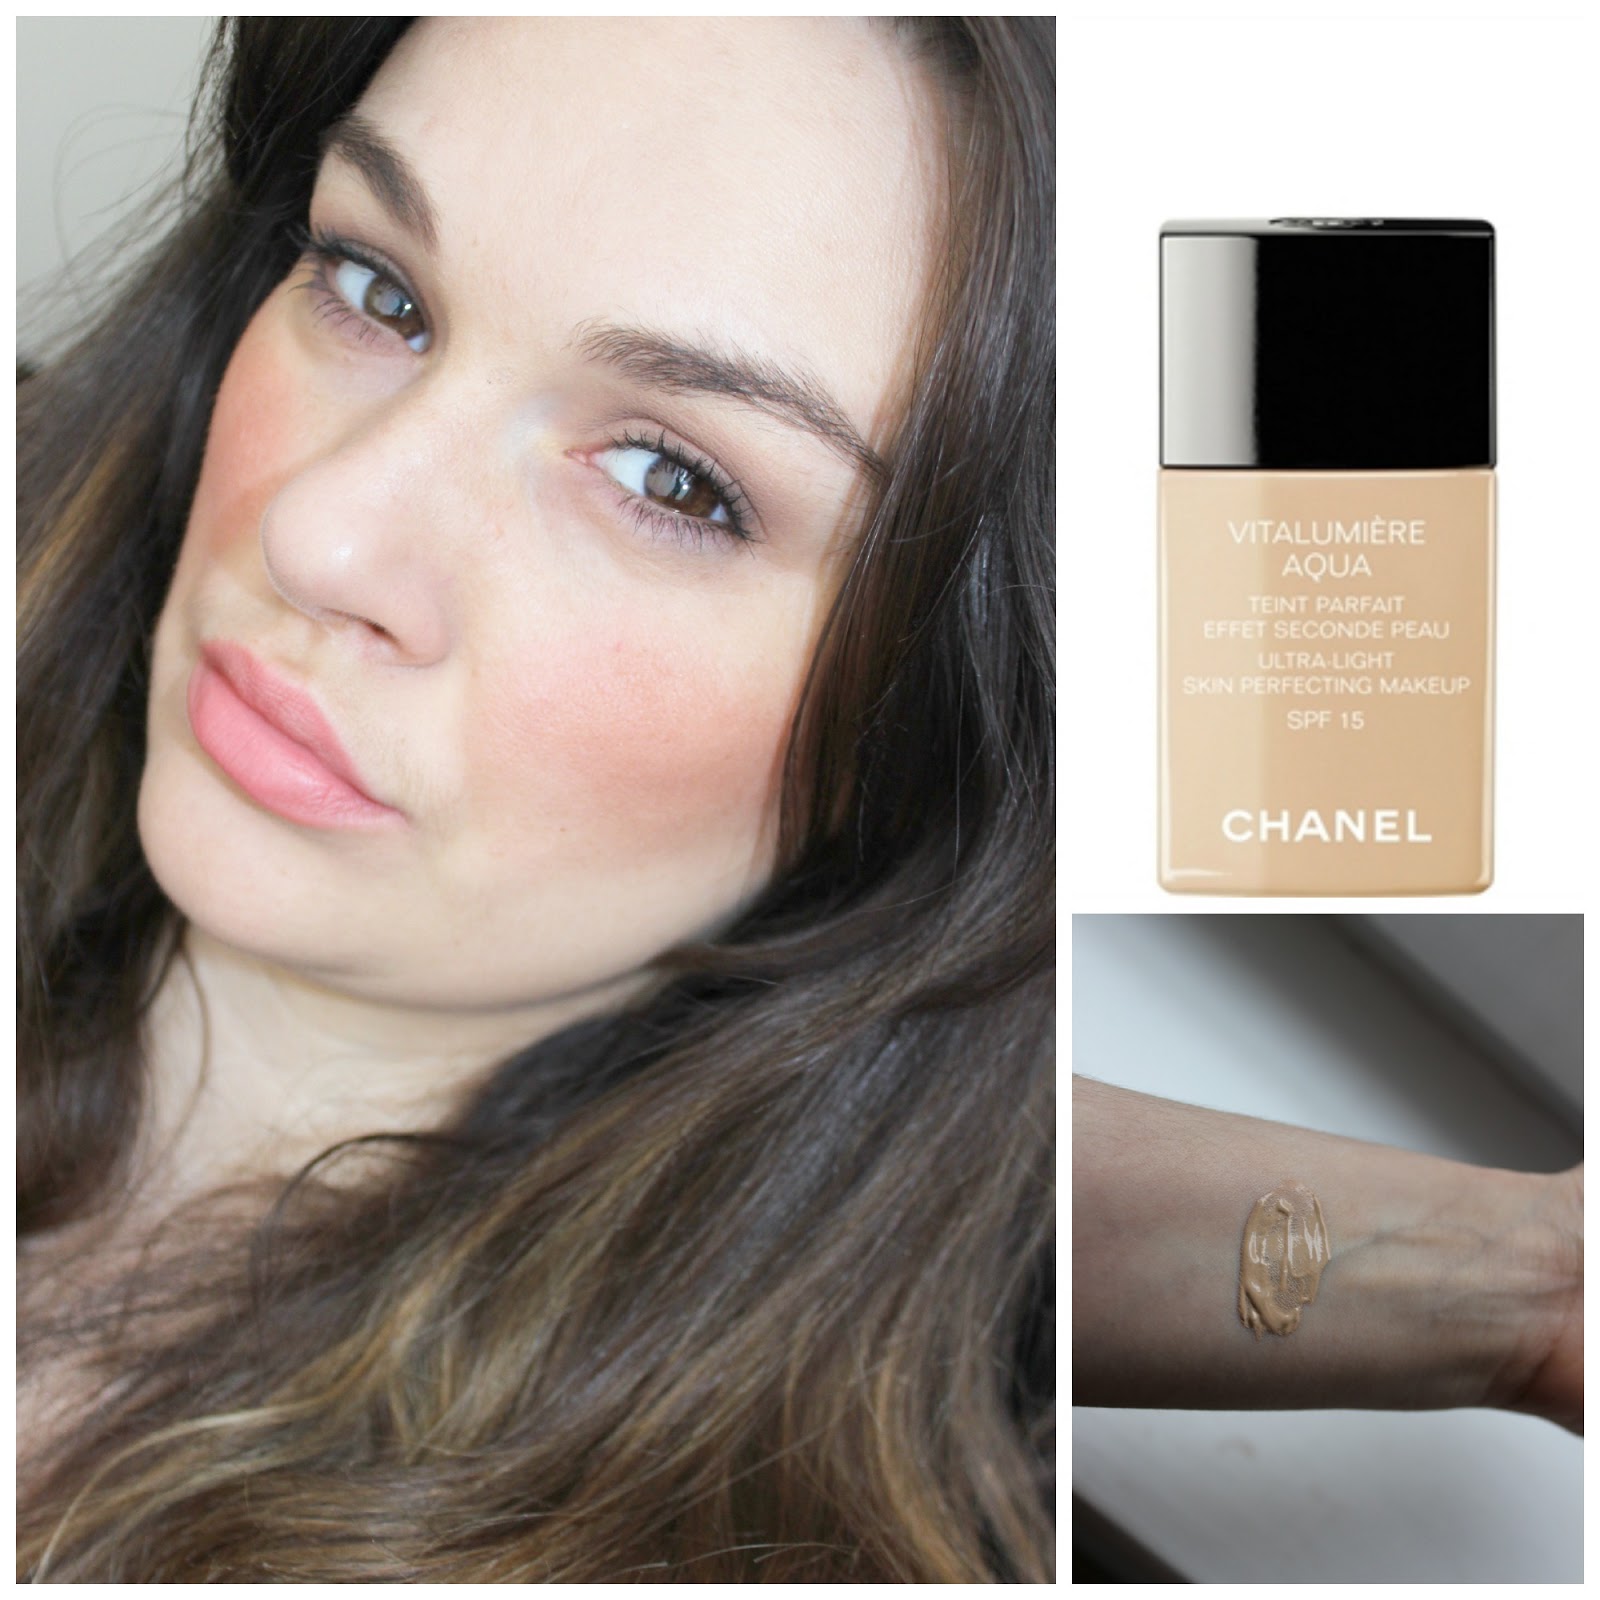 chanel skin perfecting makeup